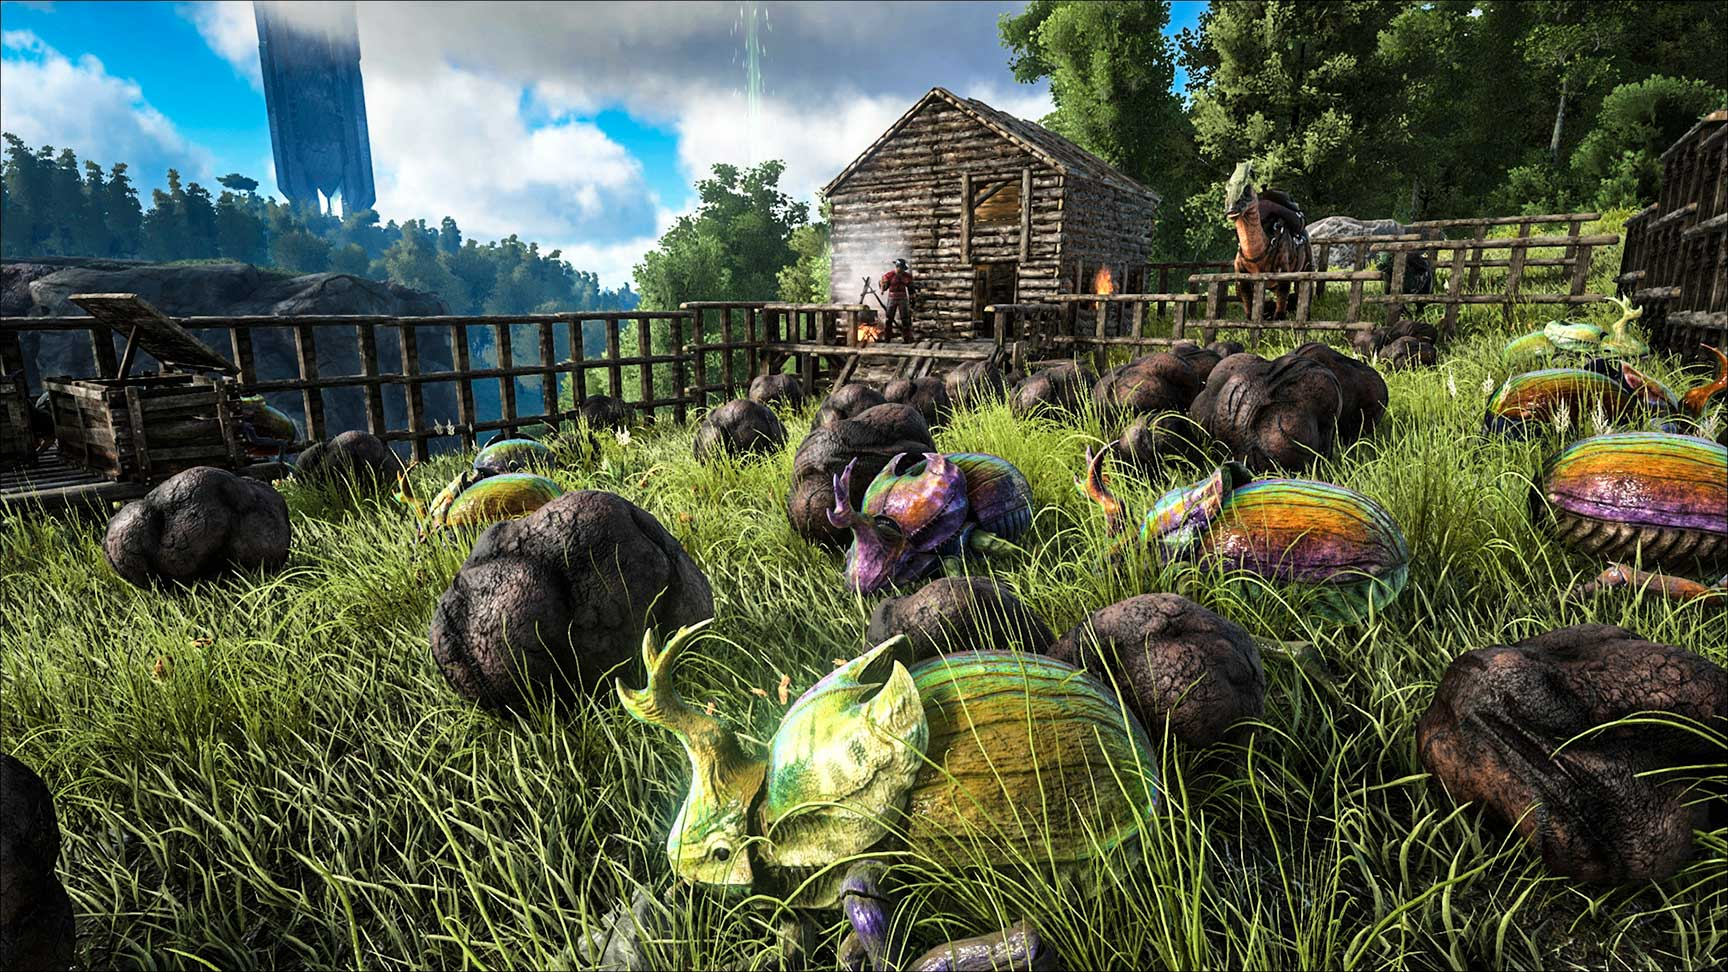 Ark Survival Evolved Sf恐竜世界でサバイバル はじめようxbox Game Pass Wpteq